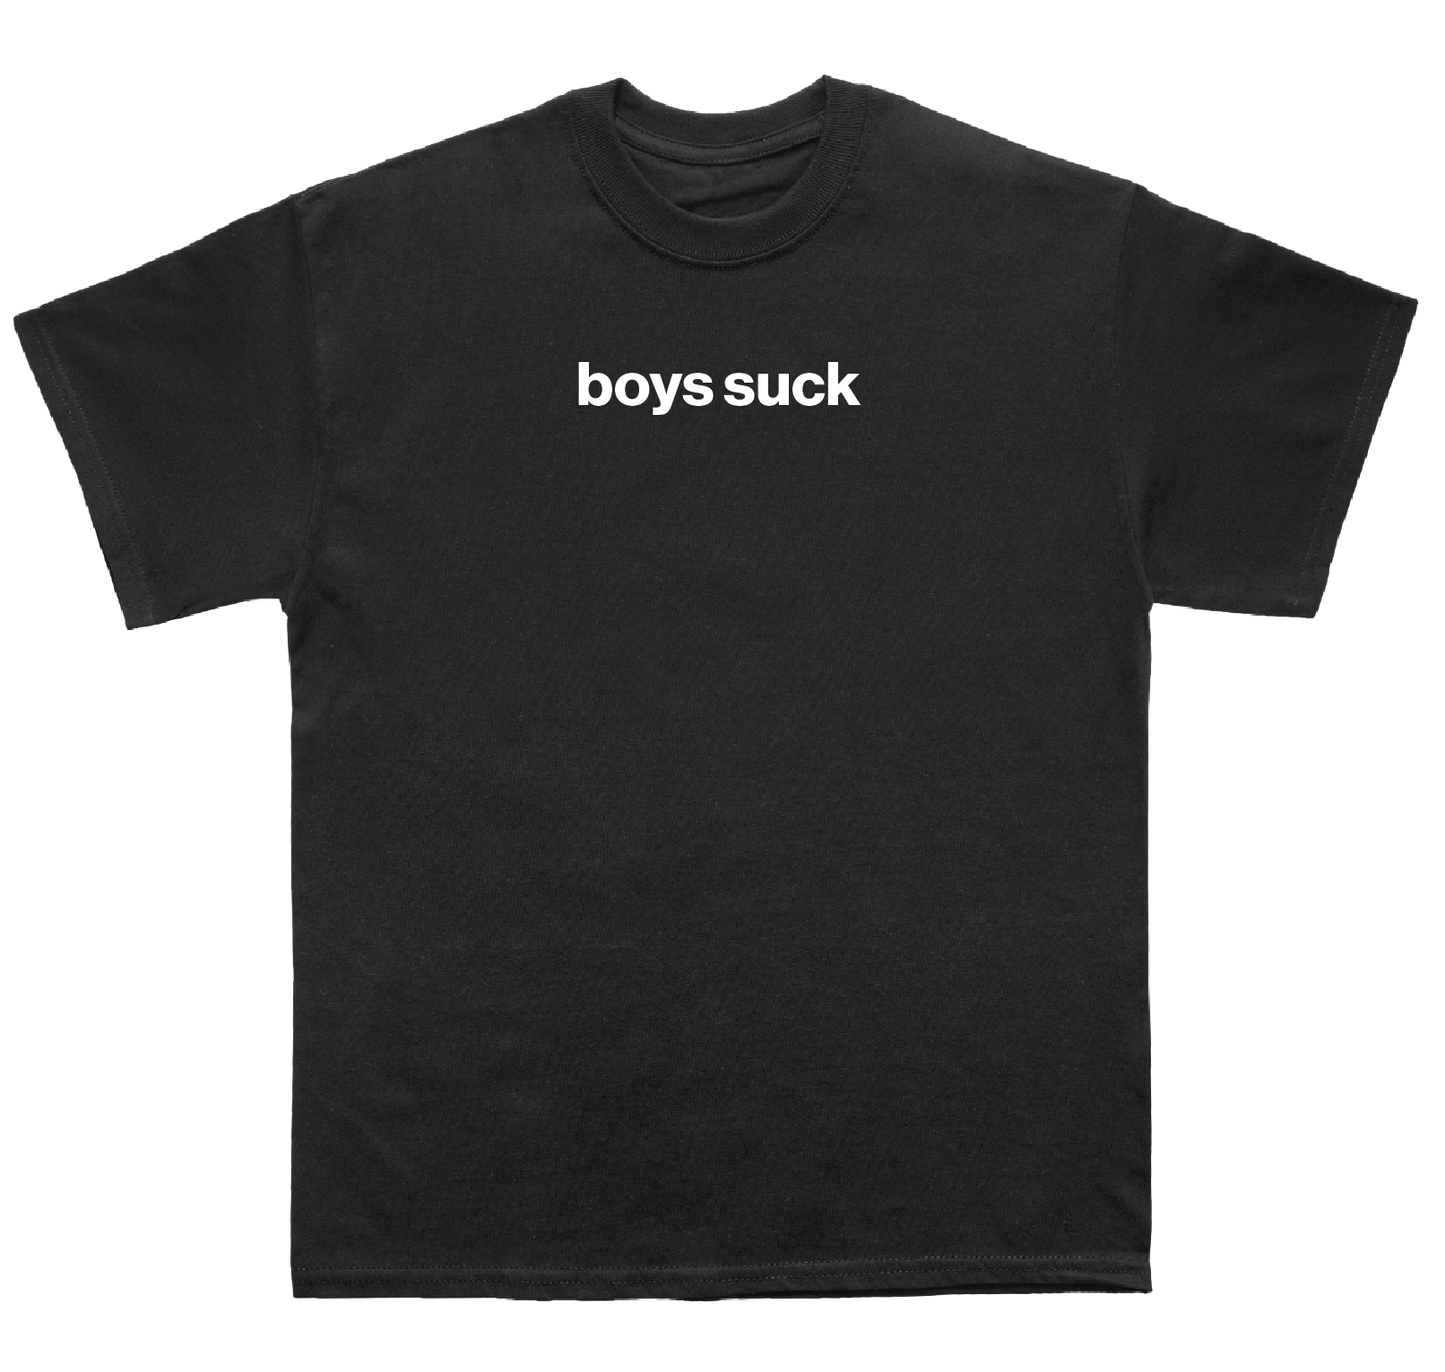 boys suck shirt